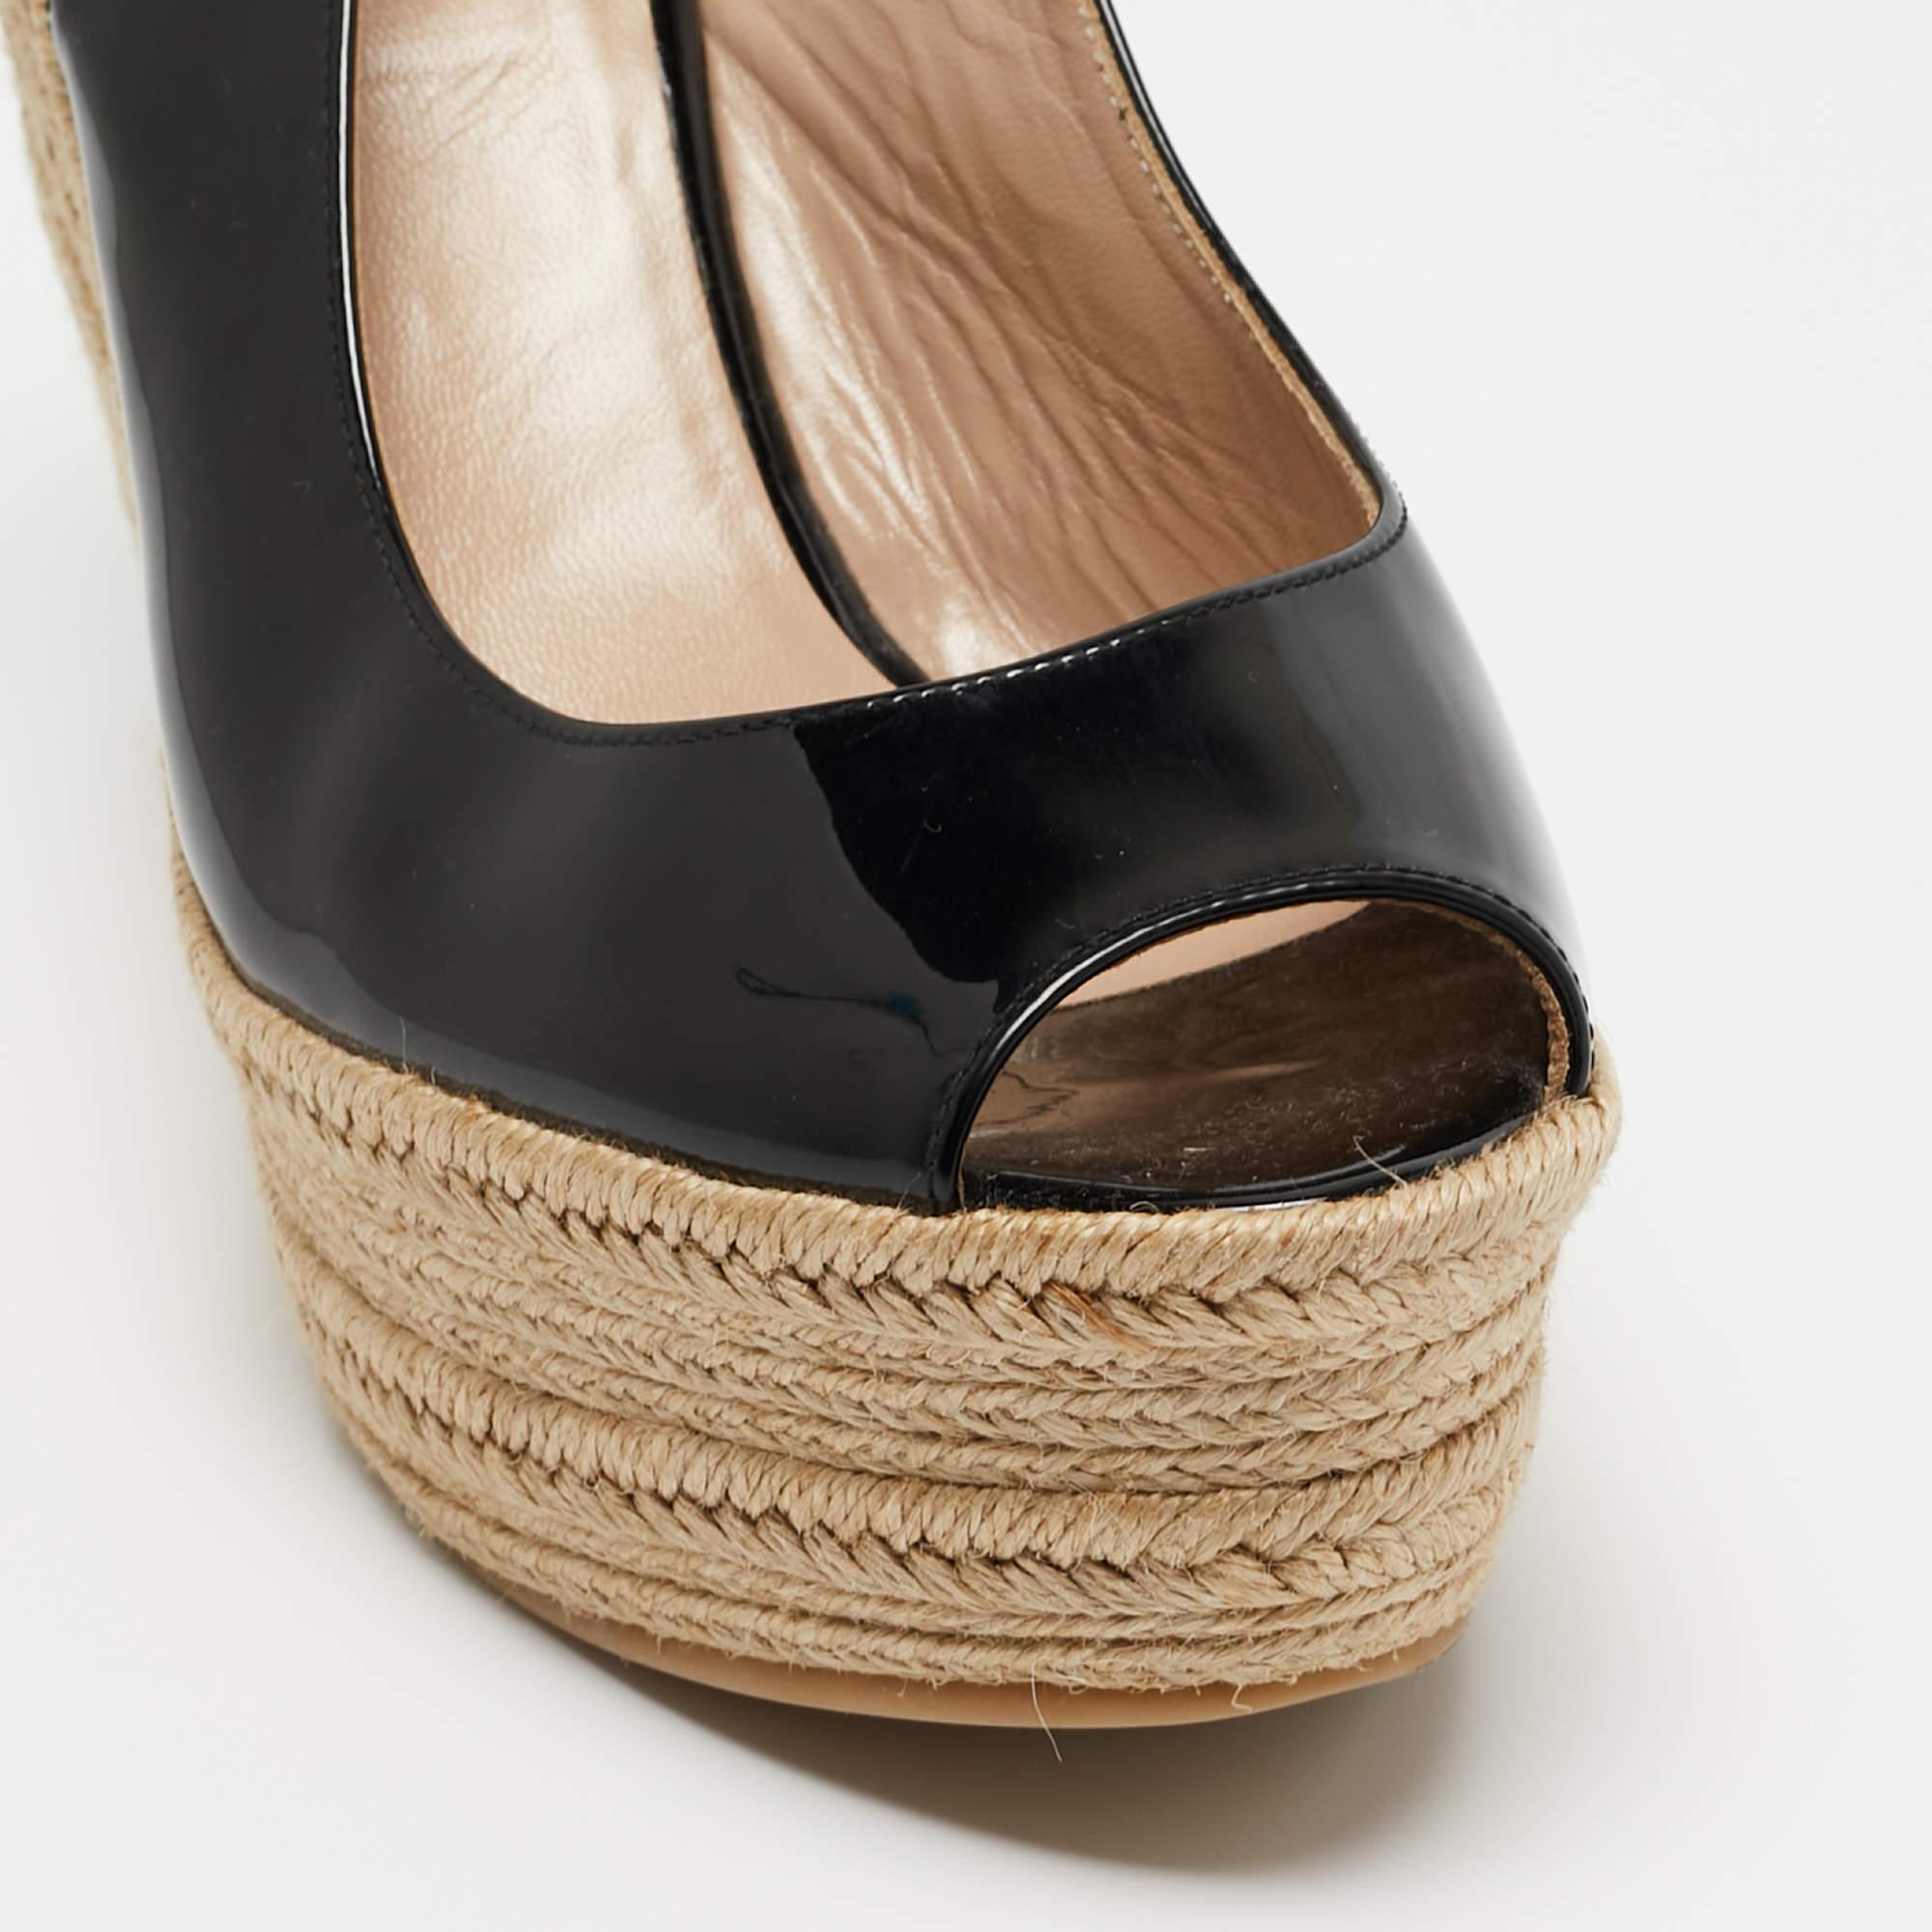 Valentino Black Patent Leather Espadrille Wedge Sandals Size 40 1